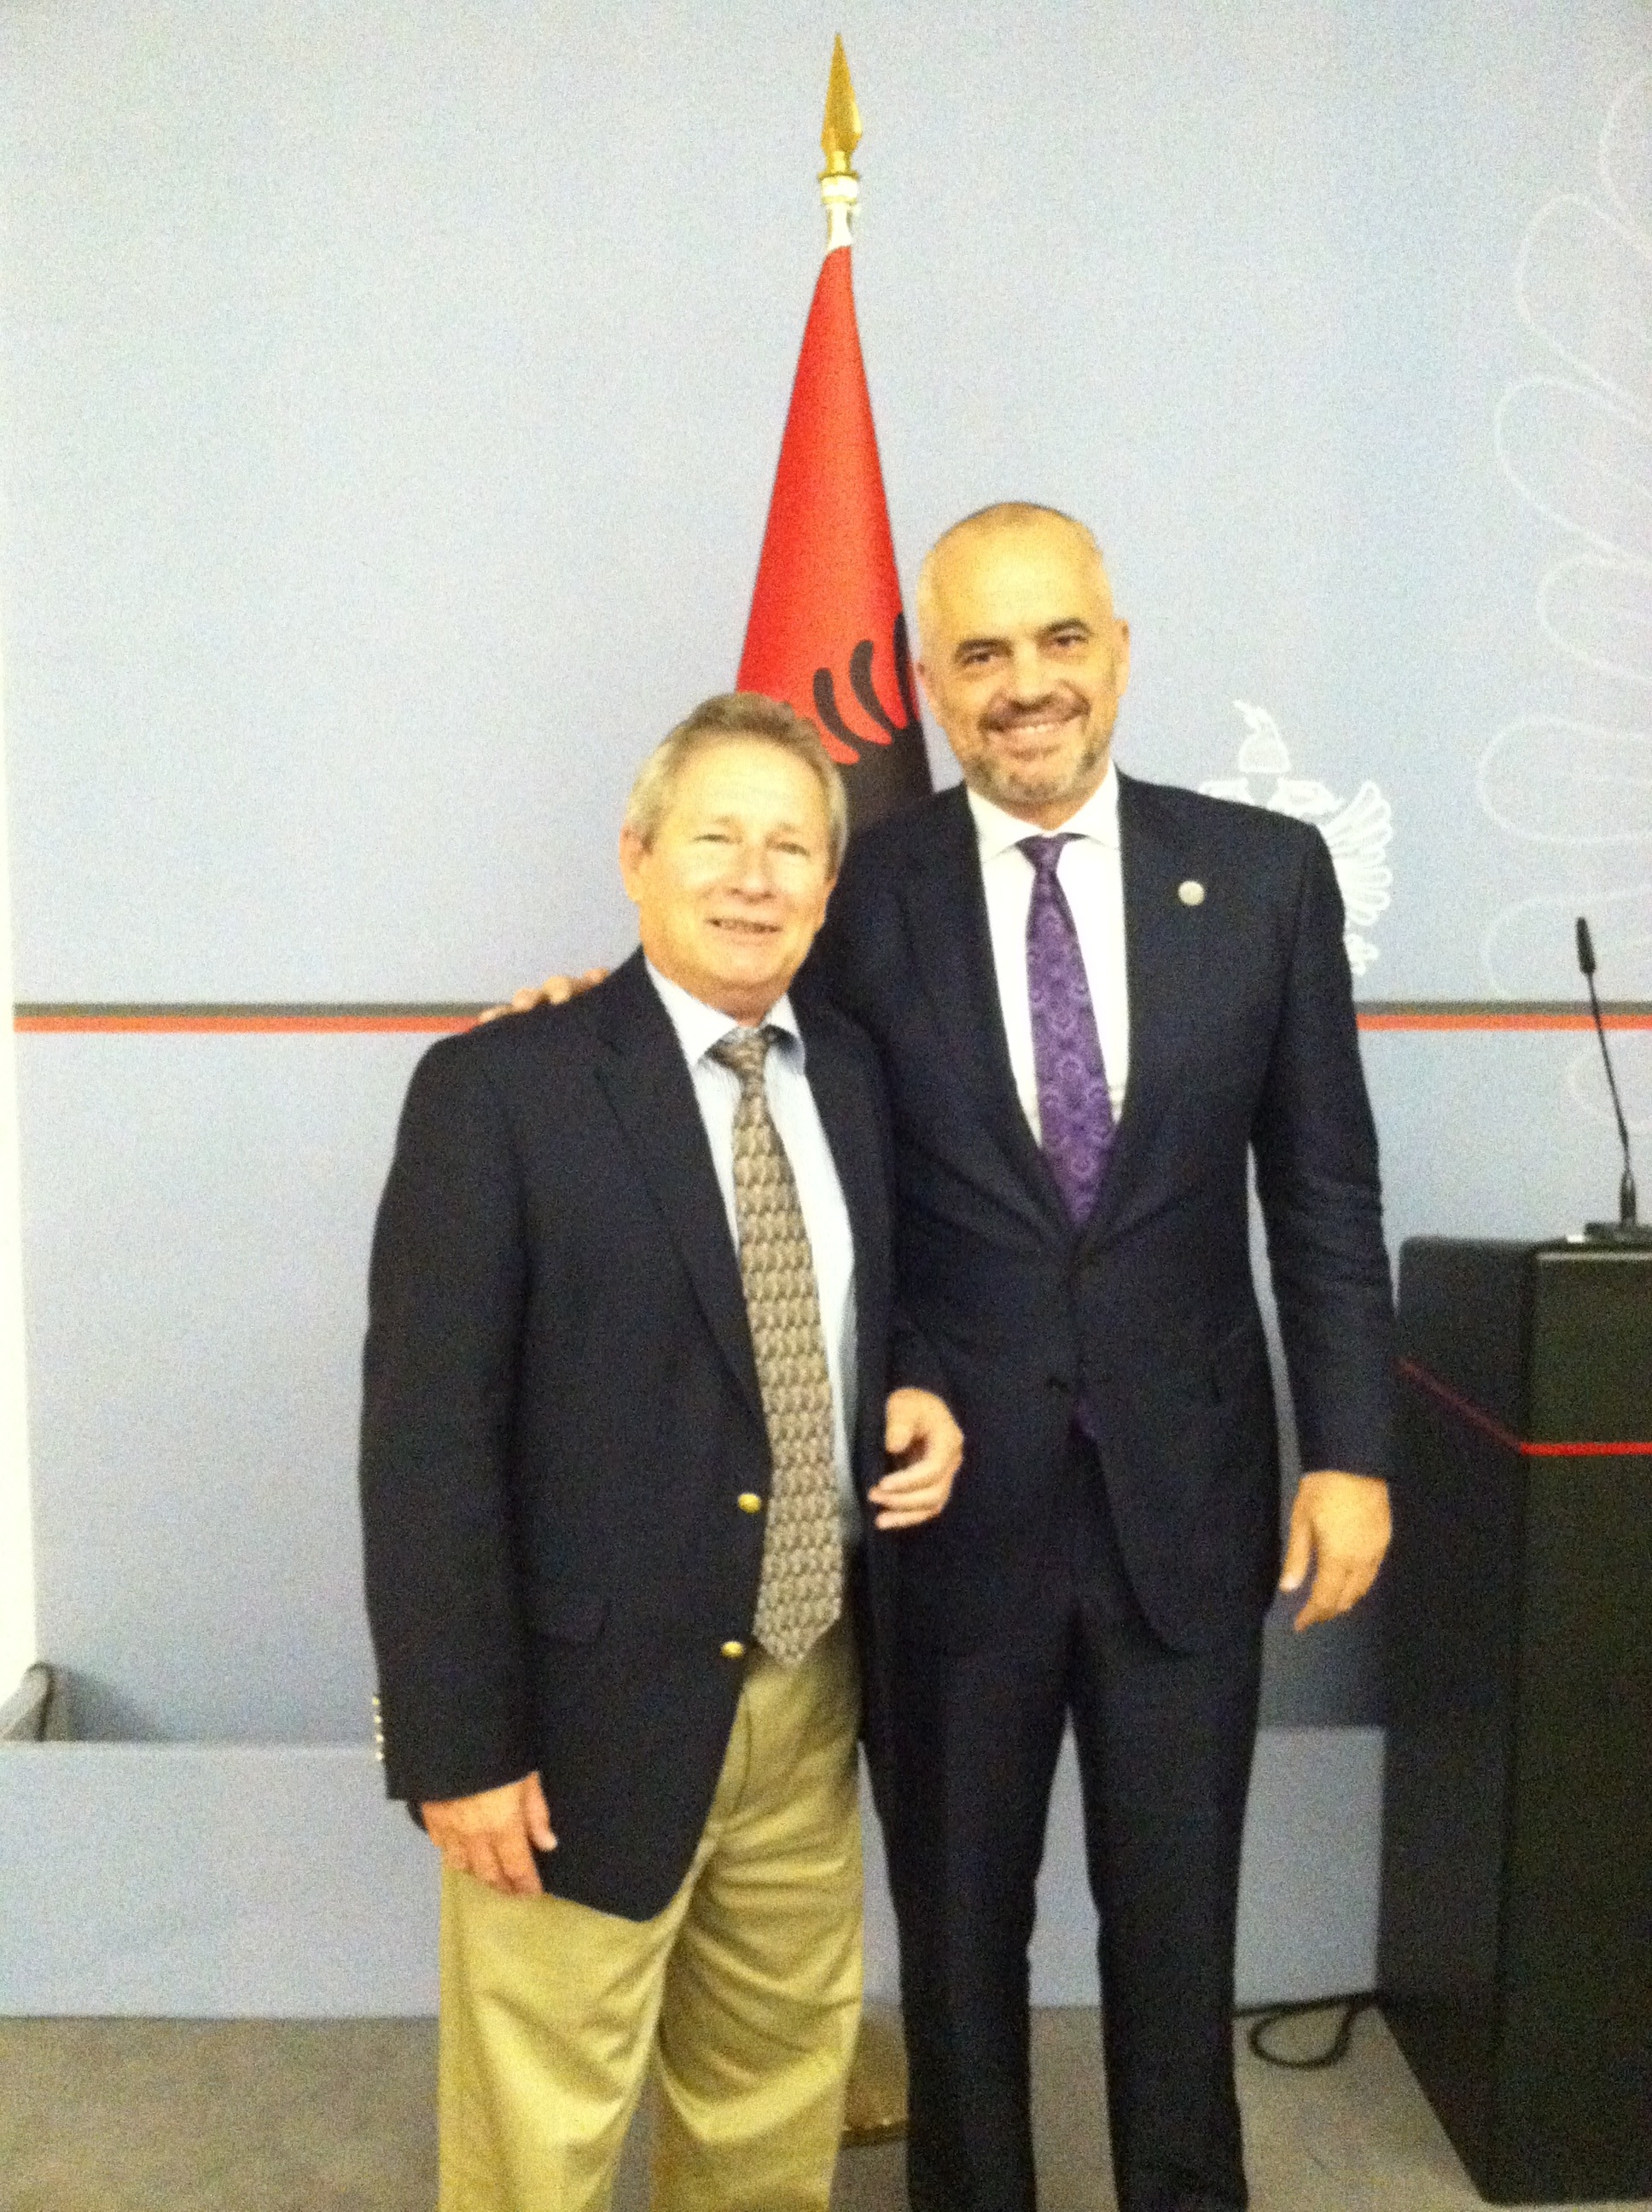 Bernd Fischer poses with Edi Rama, prime minister of Albania.